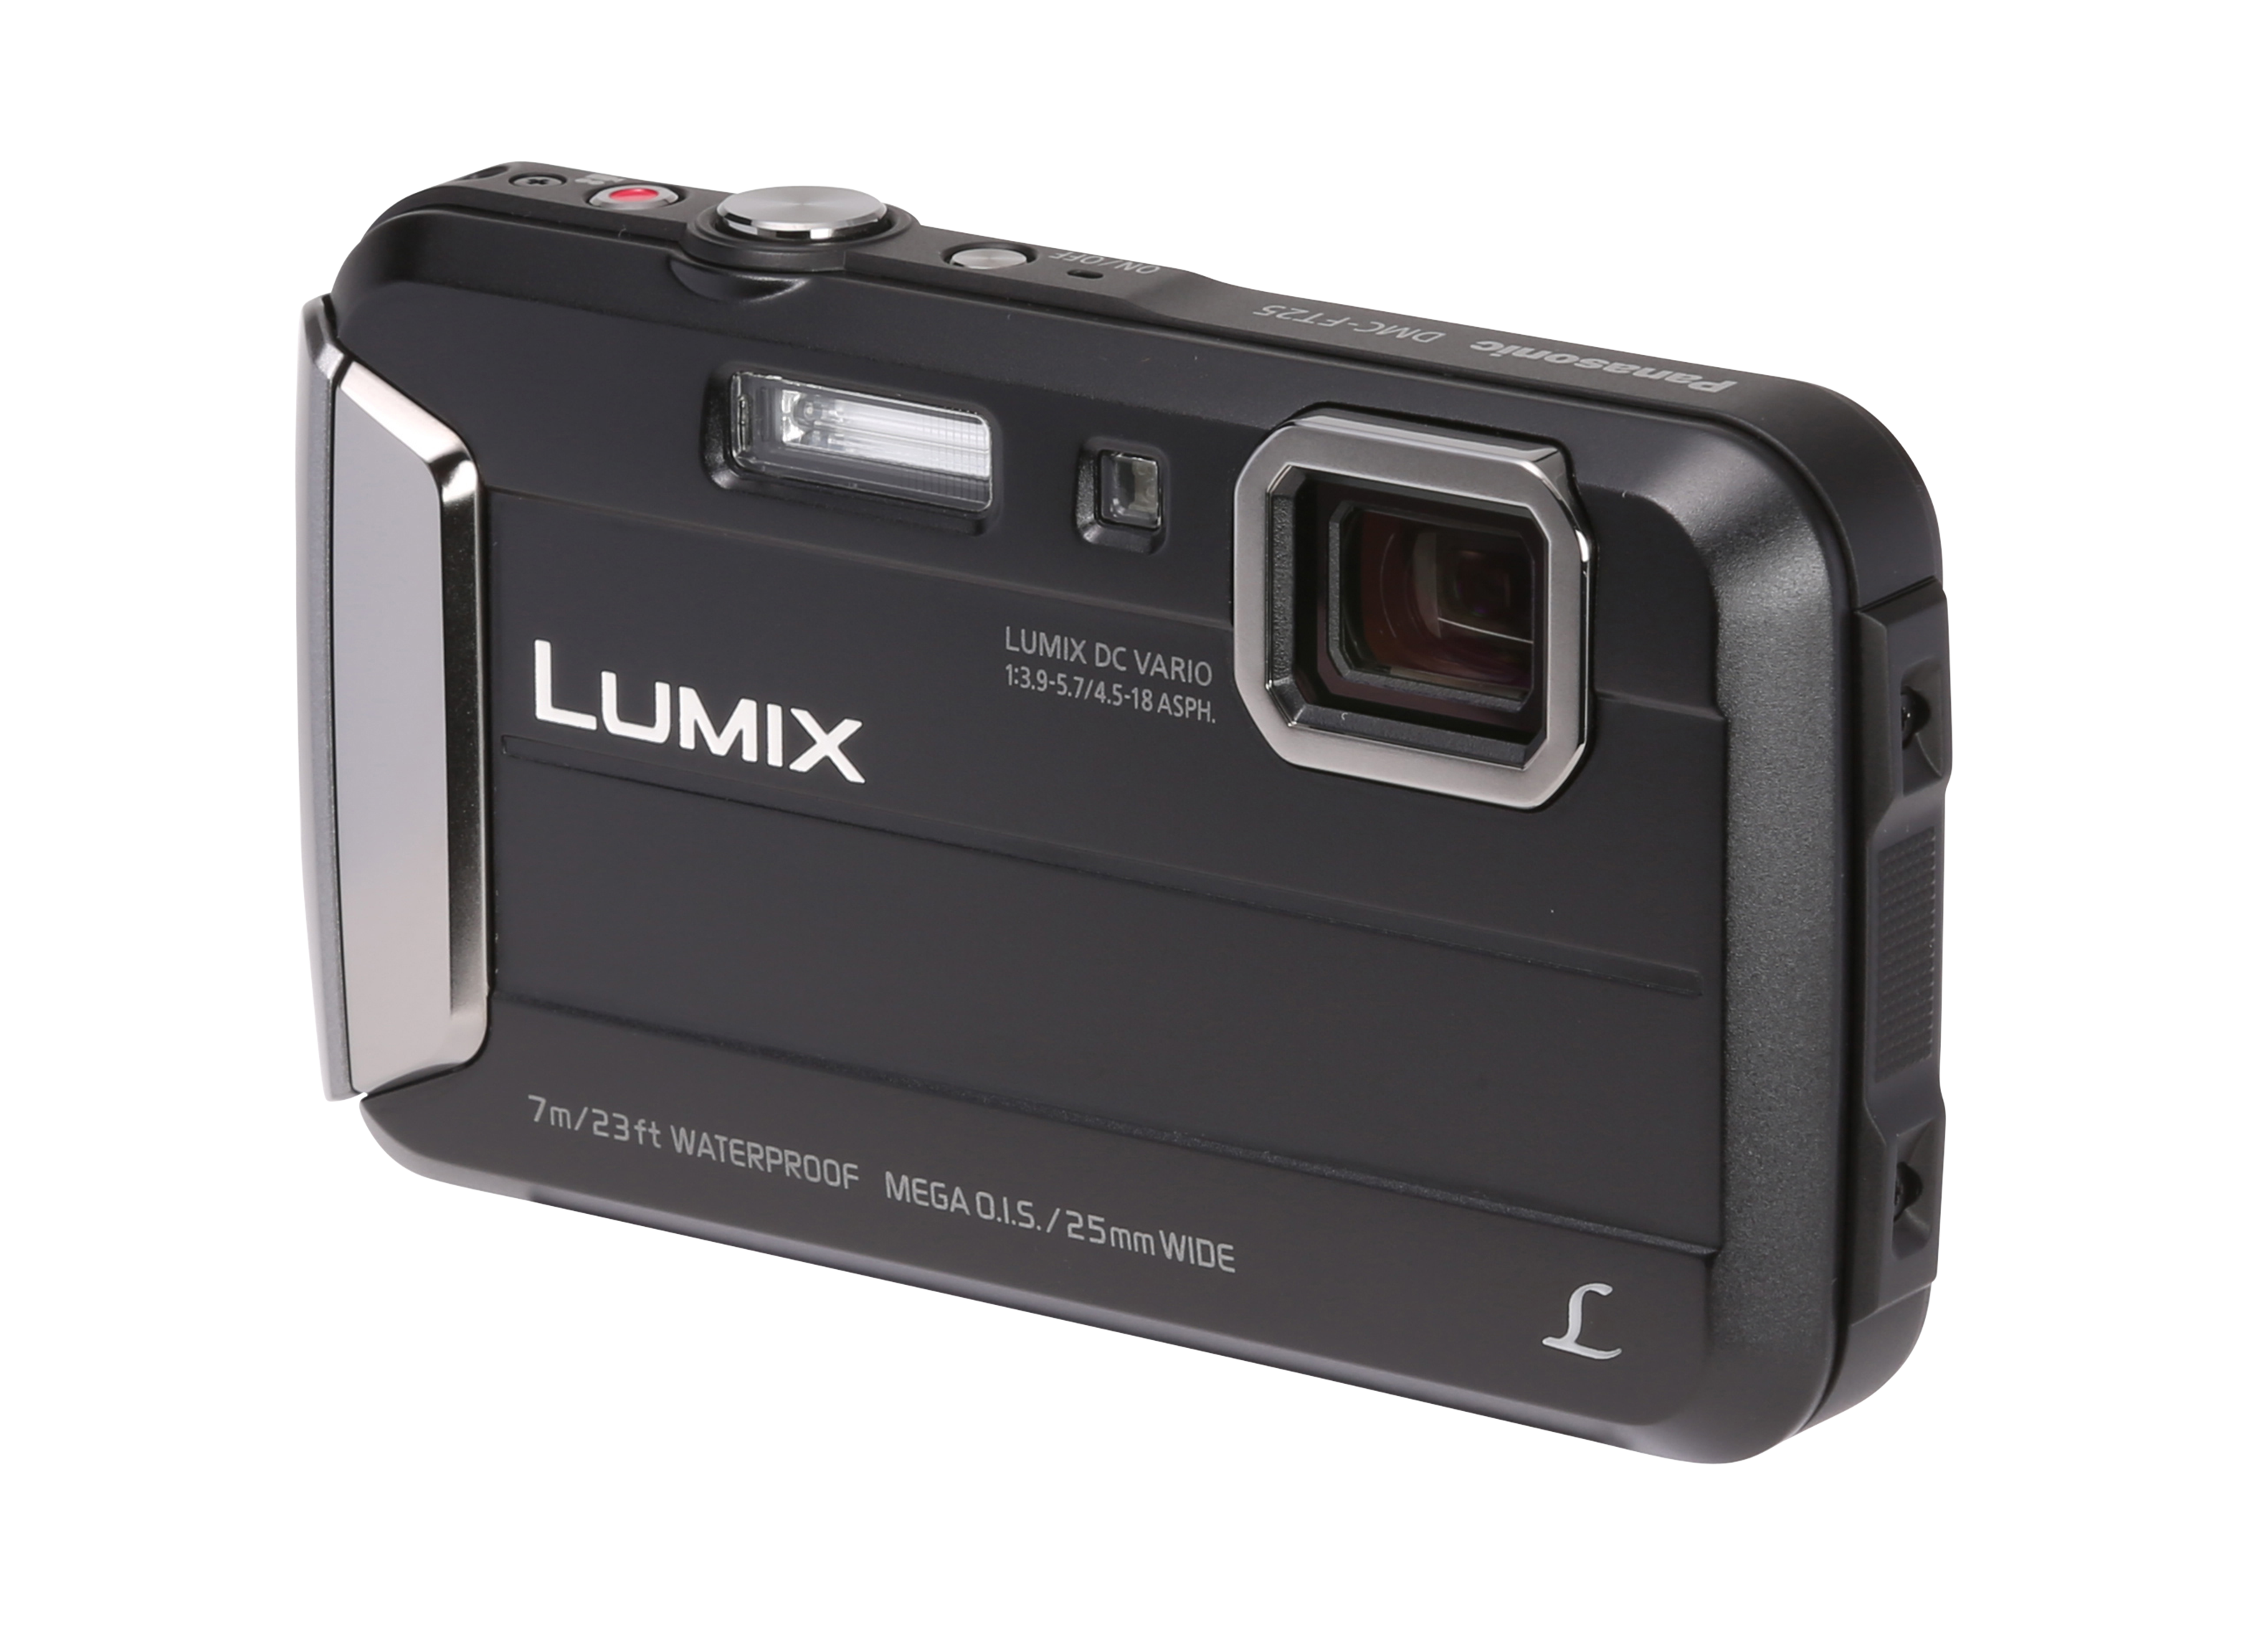 Panasonic Lumix DMC-TS25 Camera Review - Consumer Reports